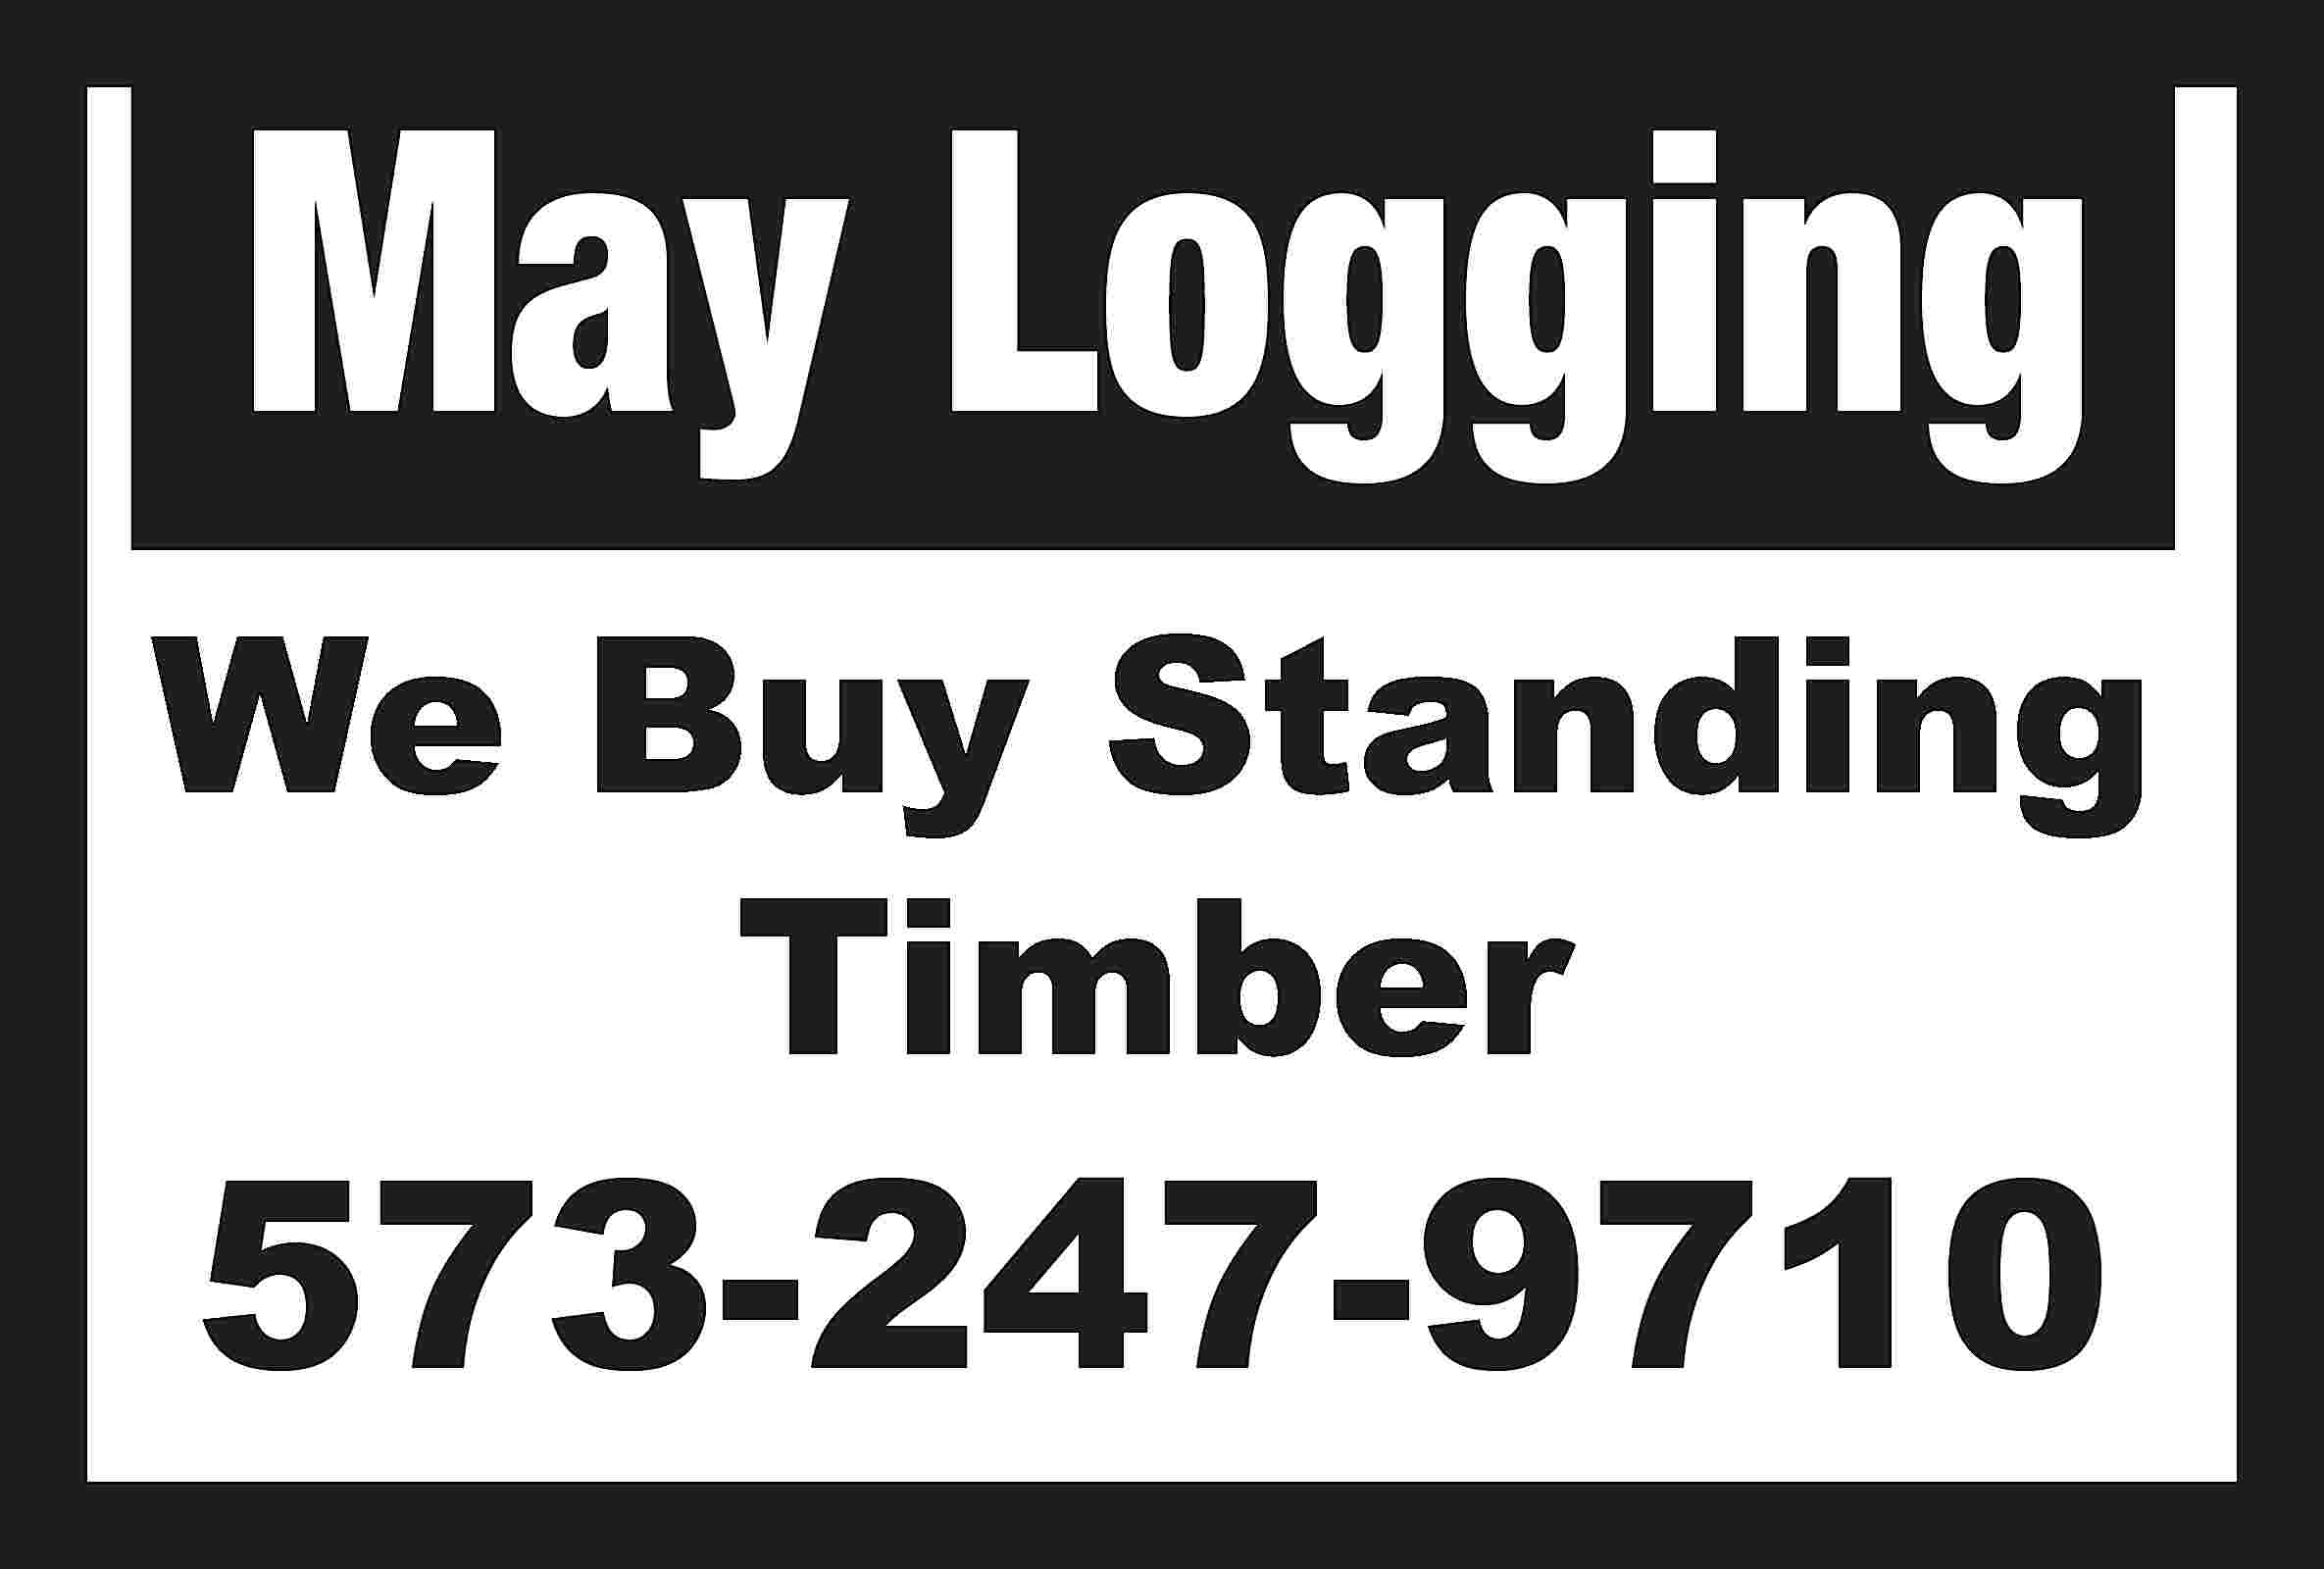 May Logging We Buy Standing  May Logging We Buy Standing Timber 573-247-9710